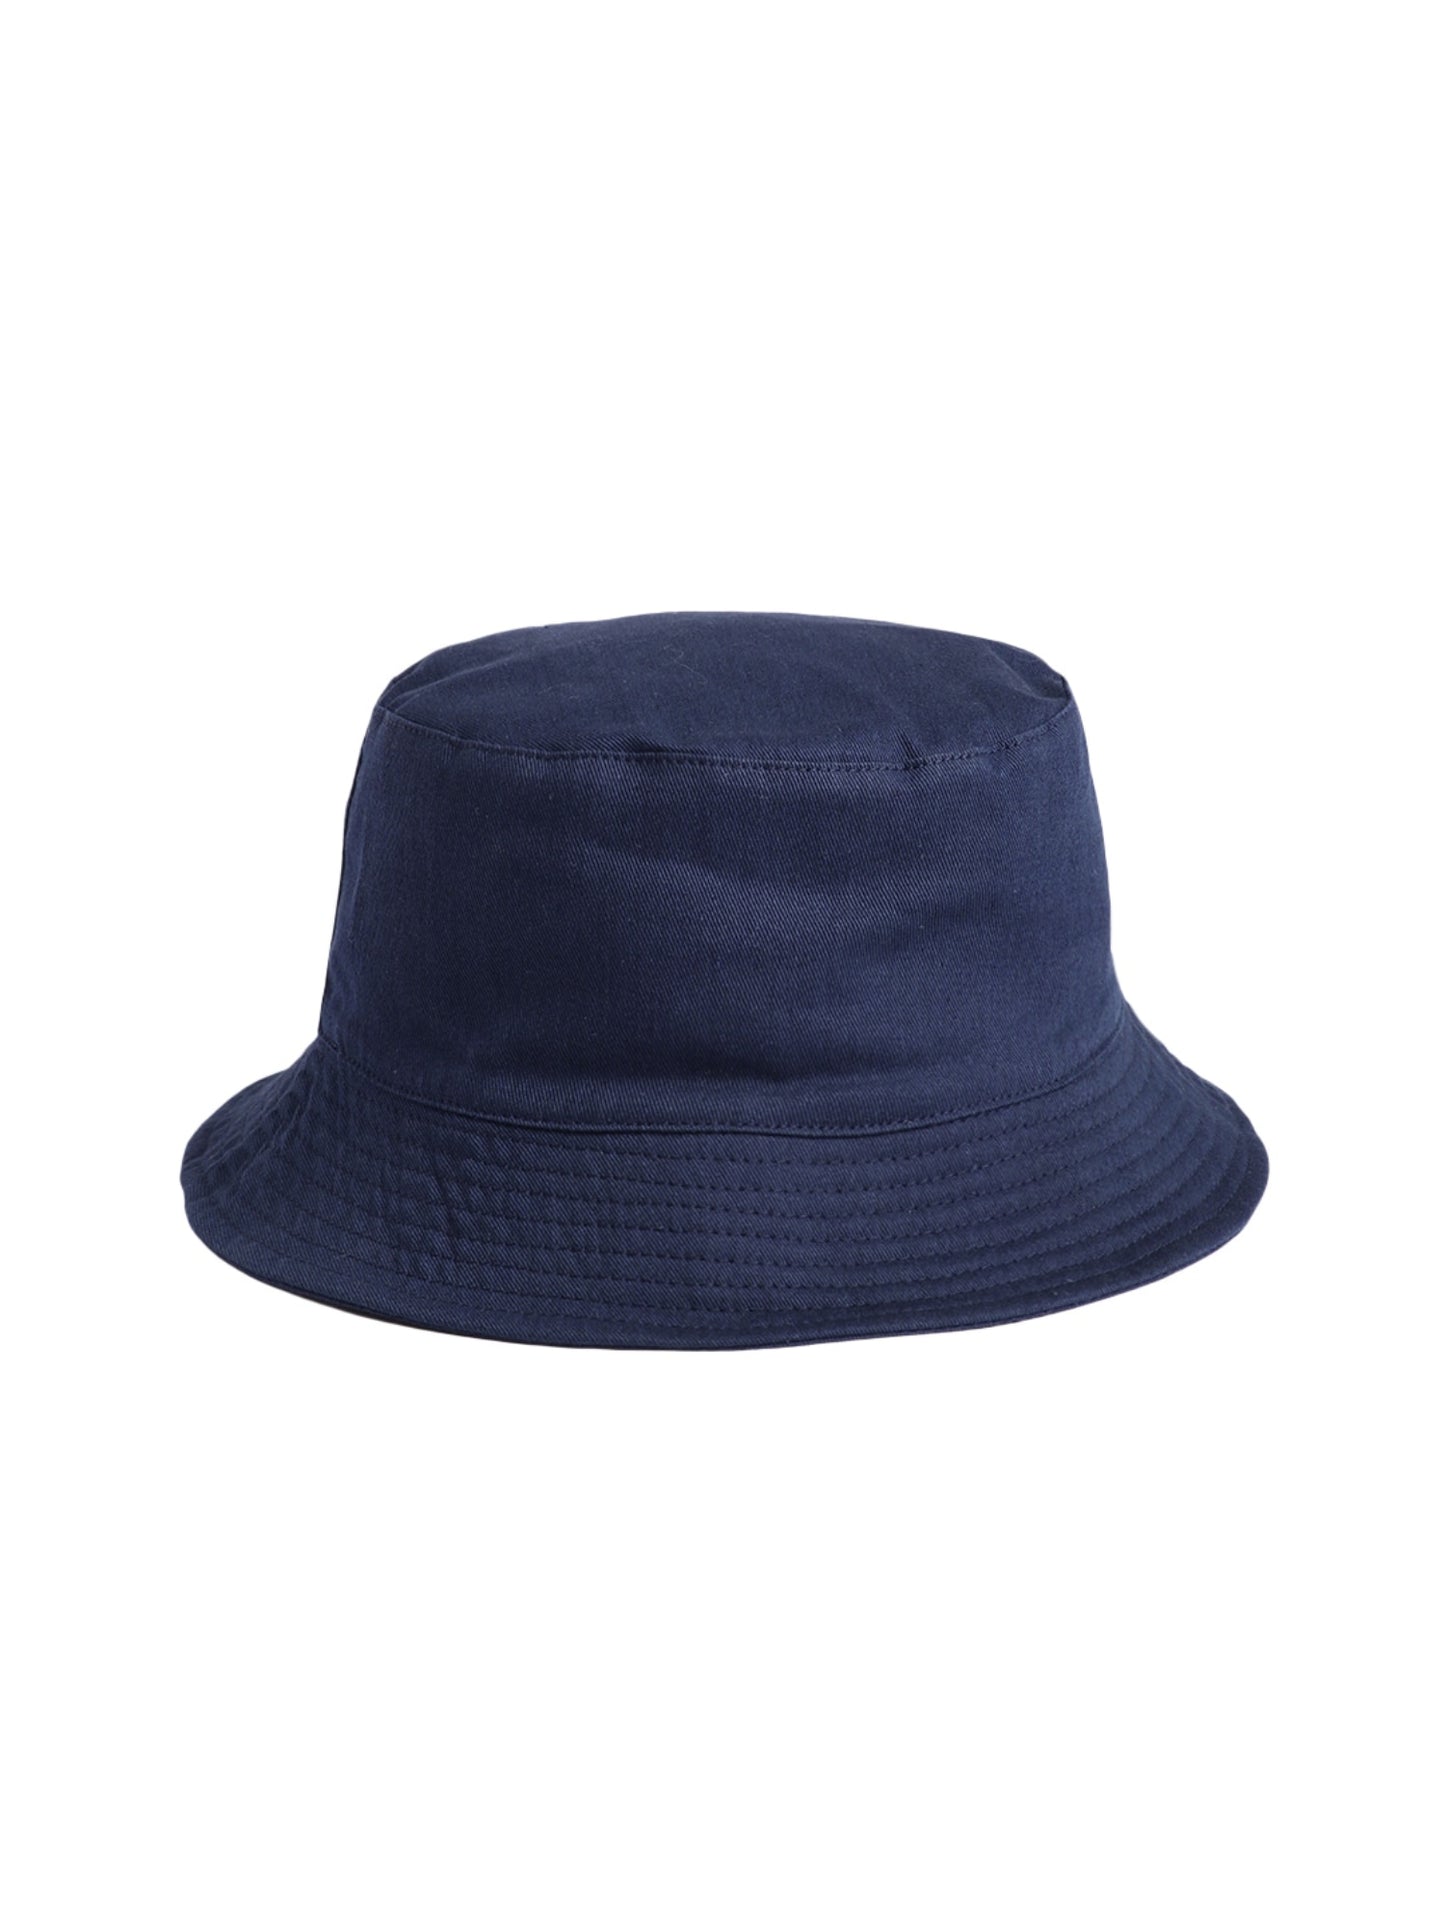 Blueberry Navy Blue Bucket Hat